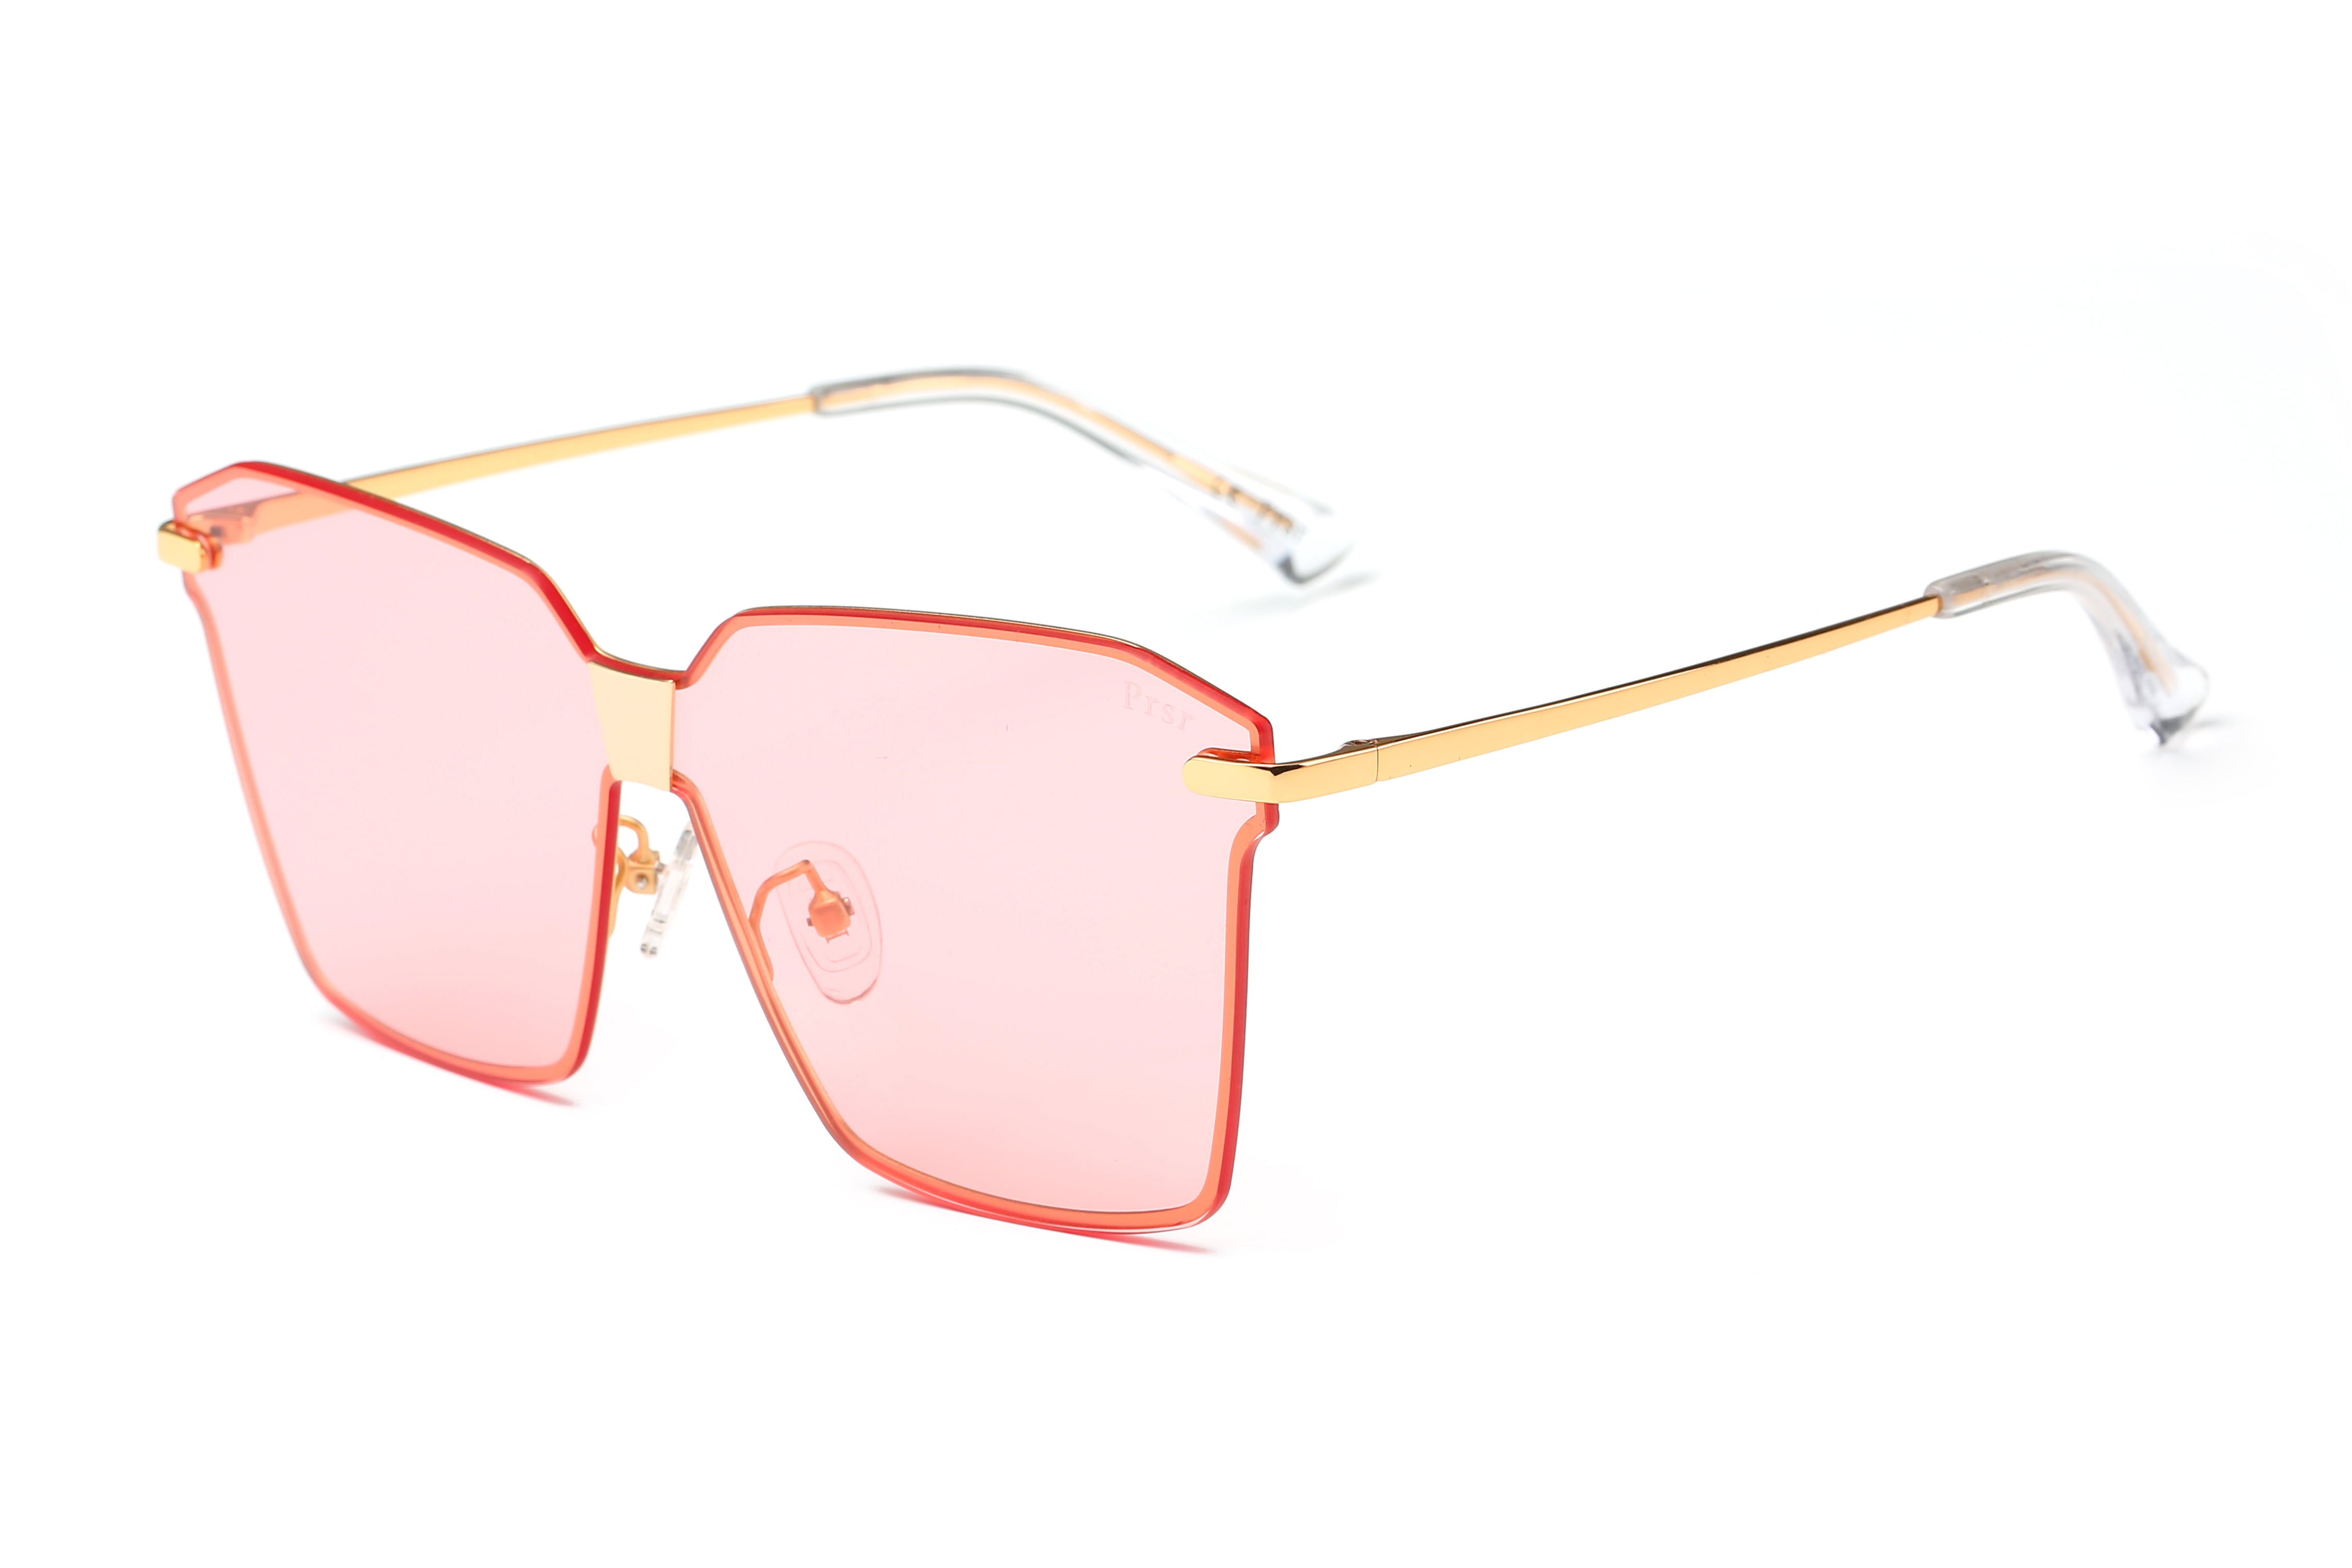 PRSR J6668 - Women Square Oversize Fashion Sunglasses Pink